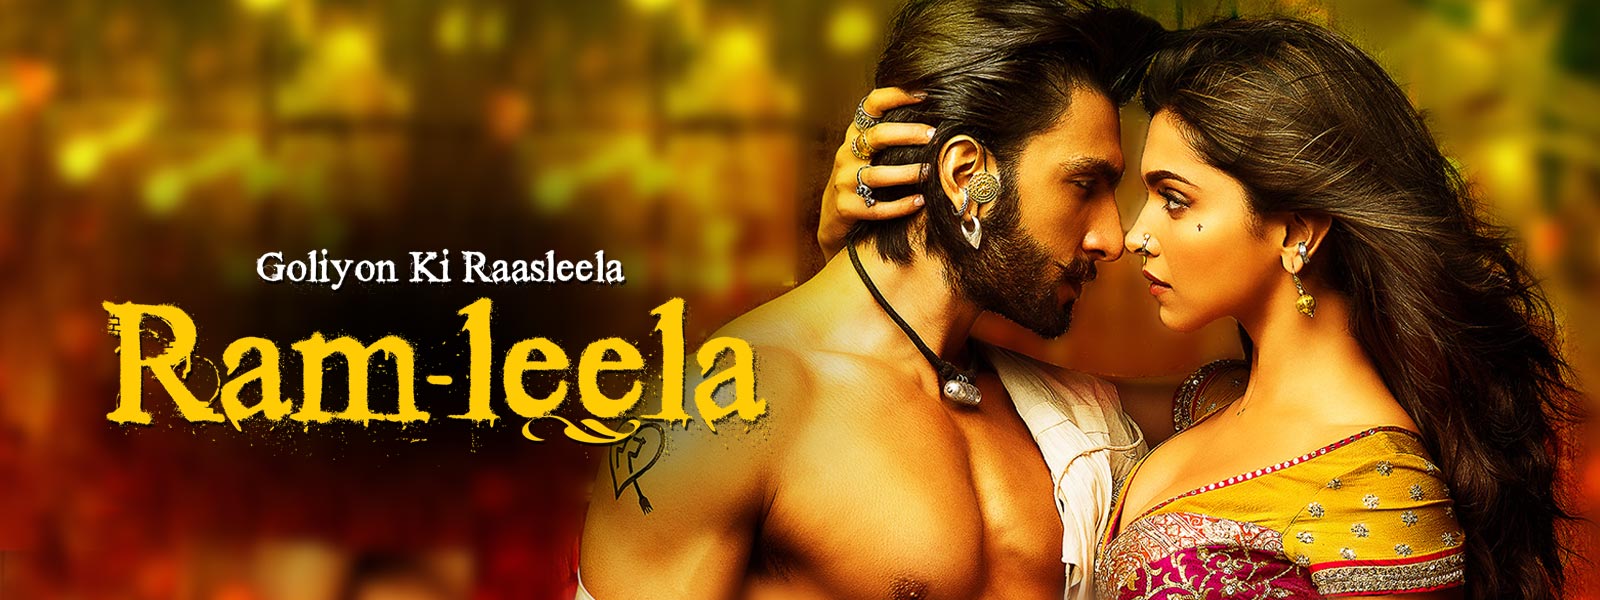 Ram Leela Full Movie Watch Online